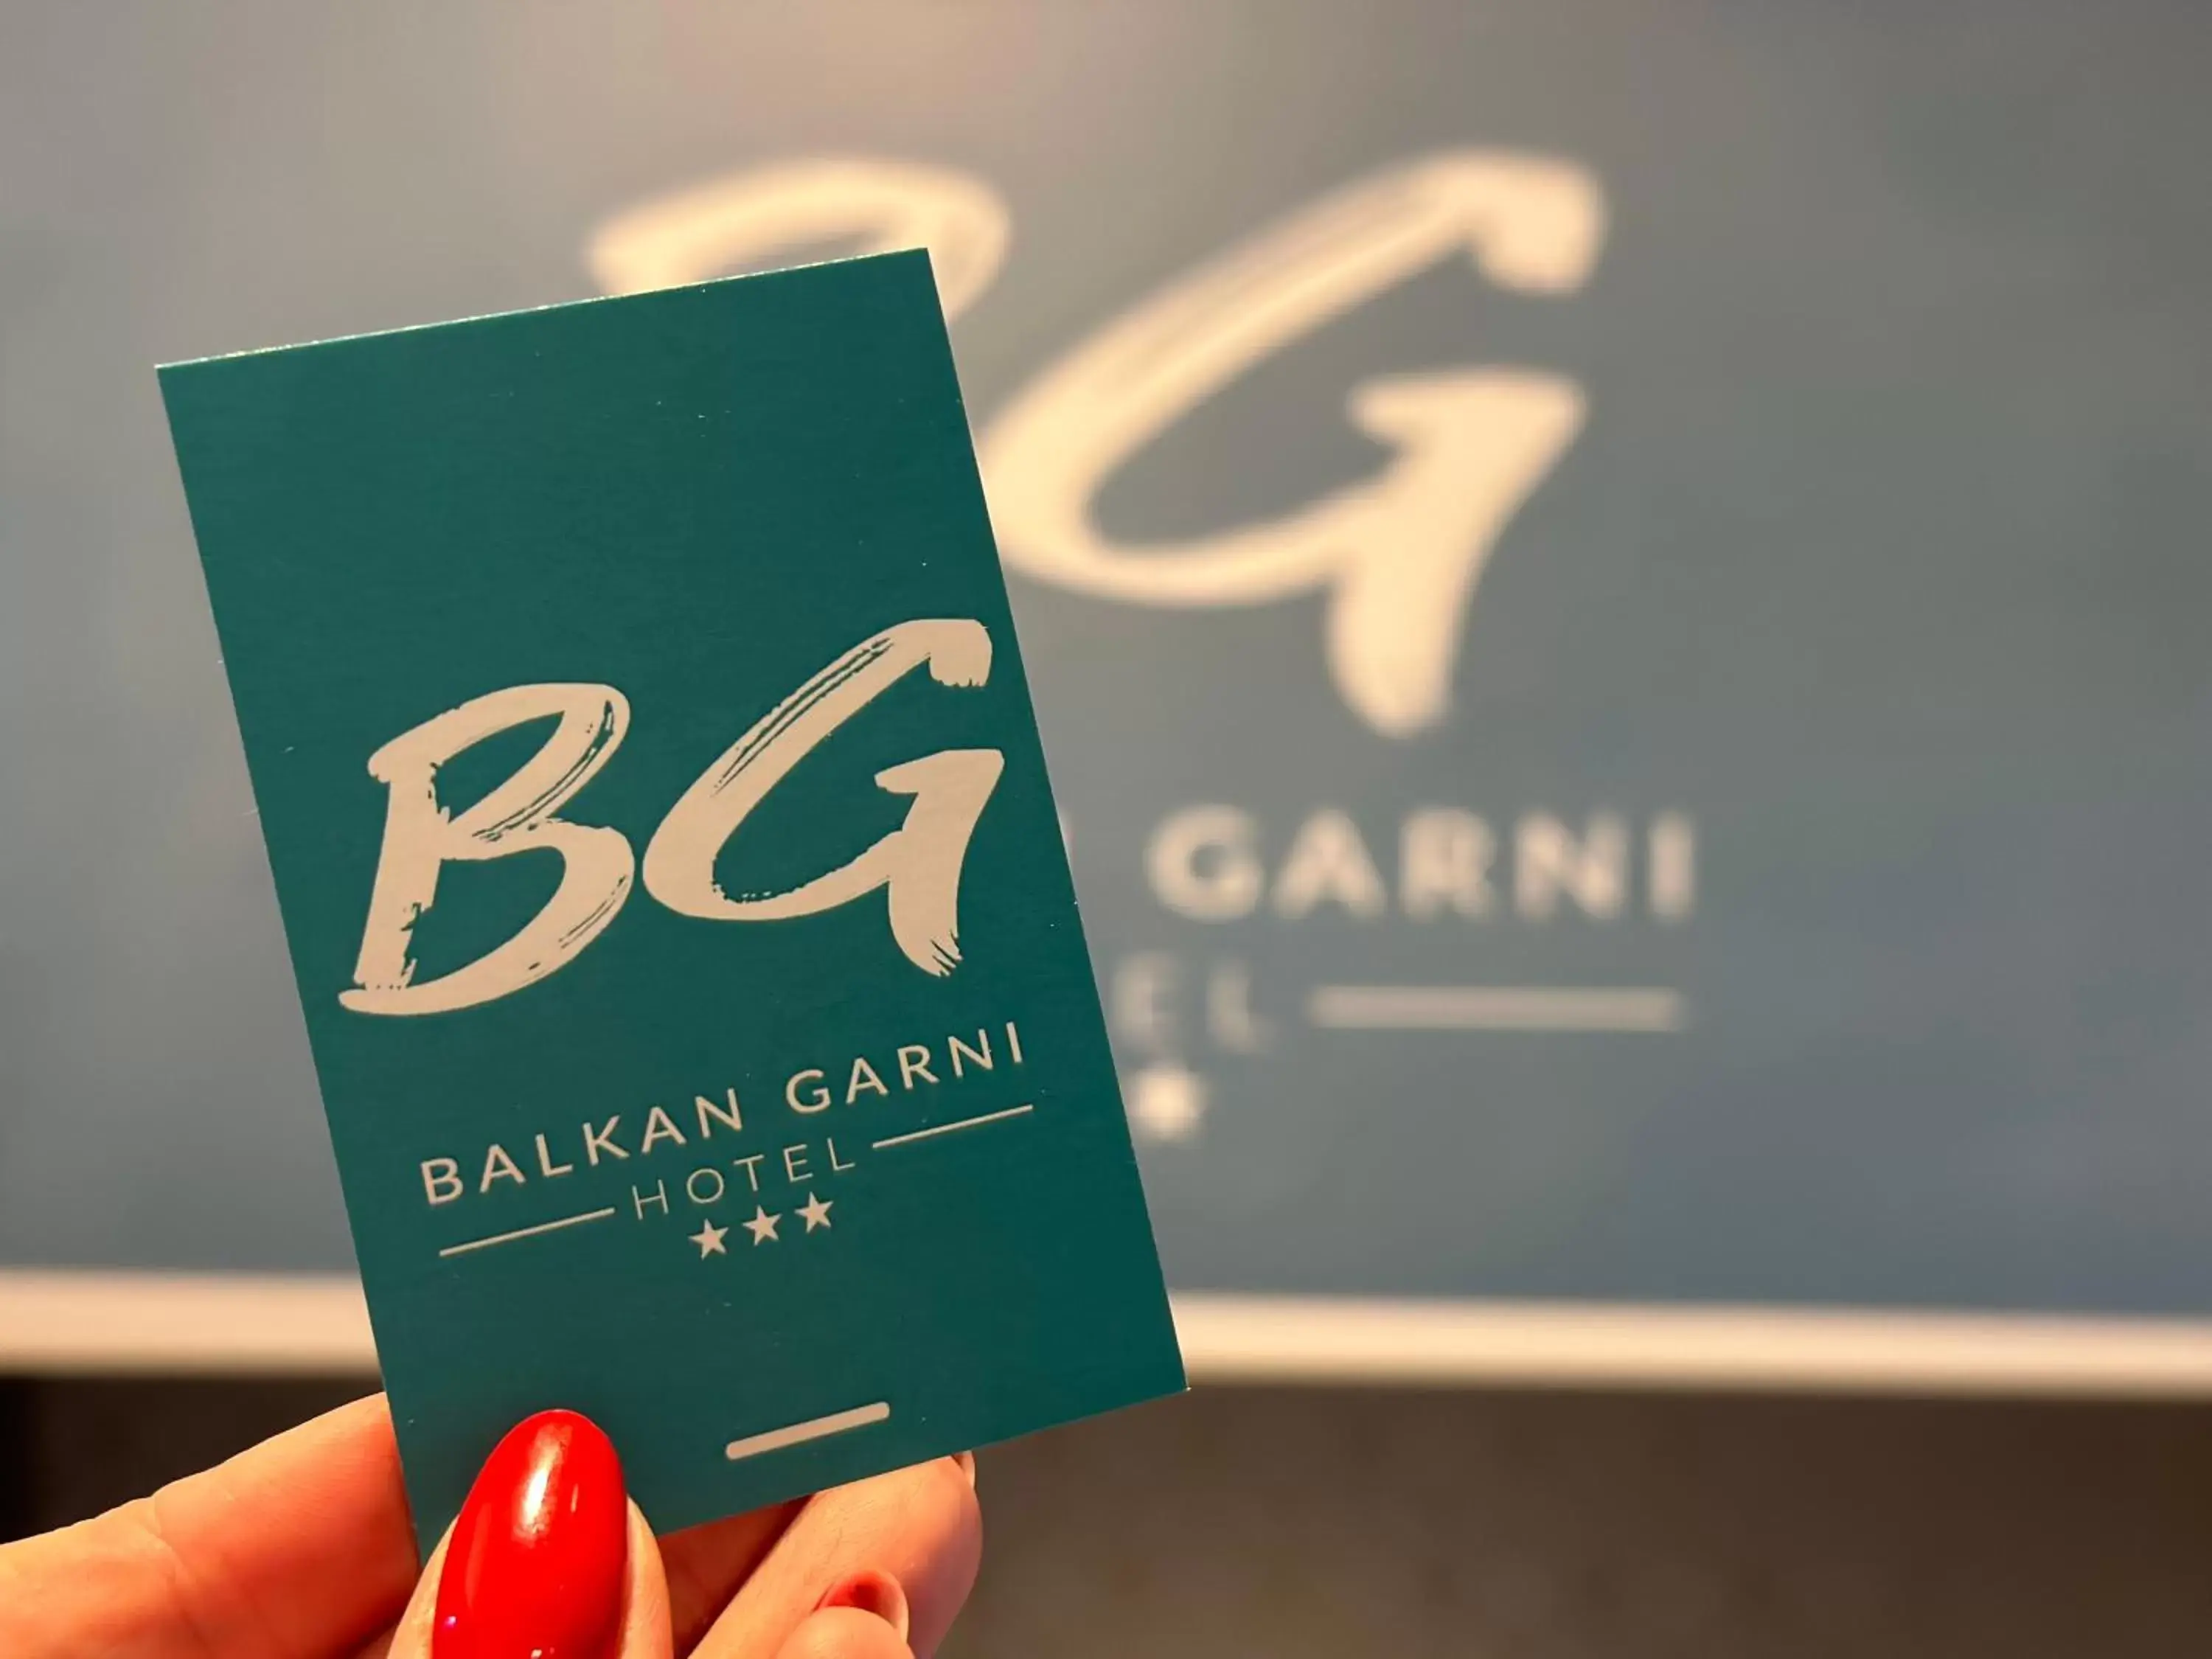 Logo/Certificate/Sign in Balkan Hotel Garni